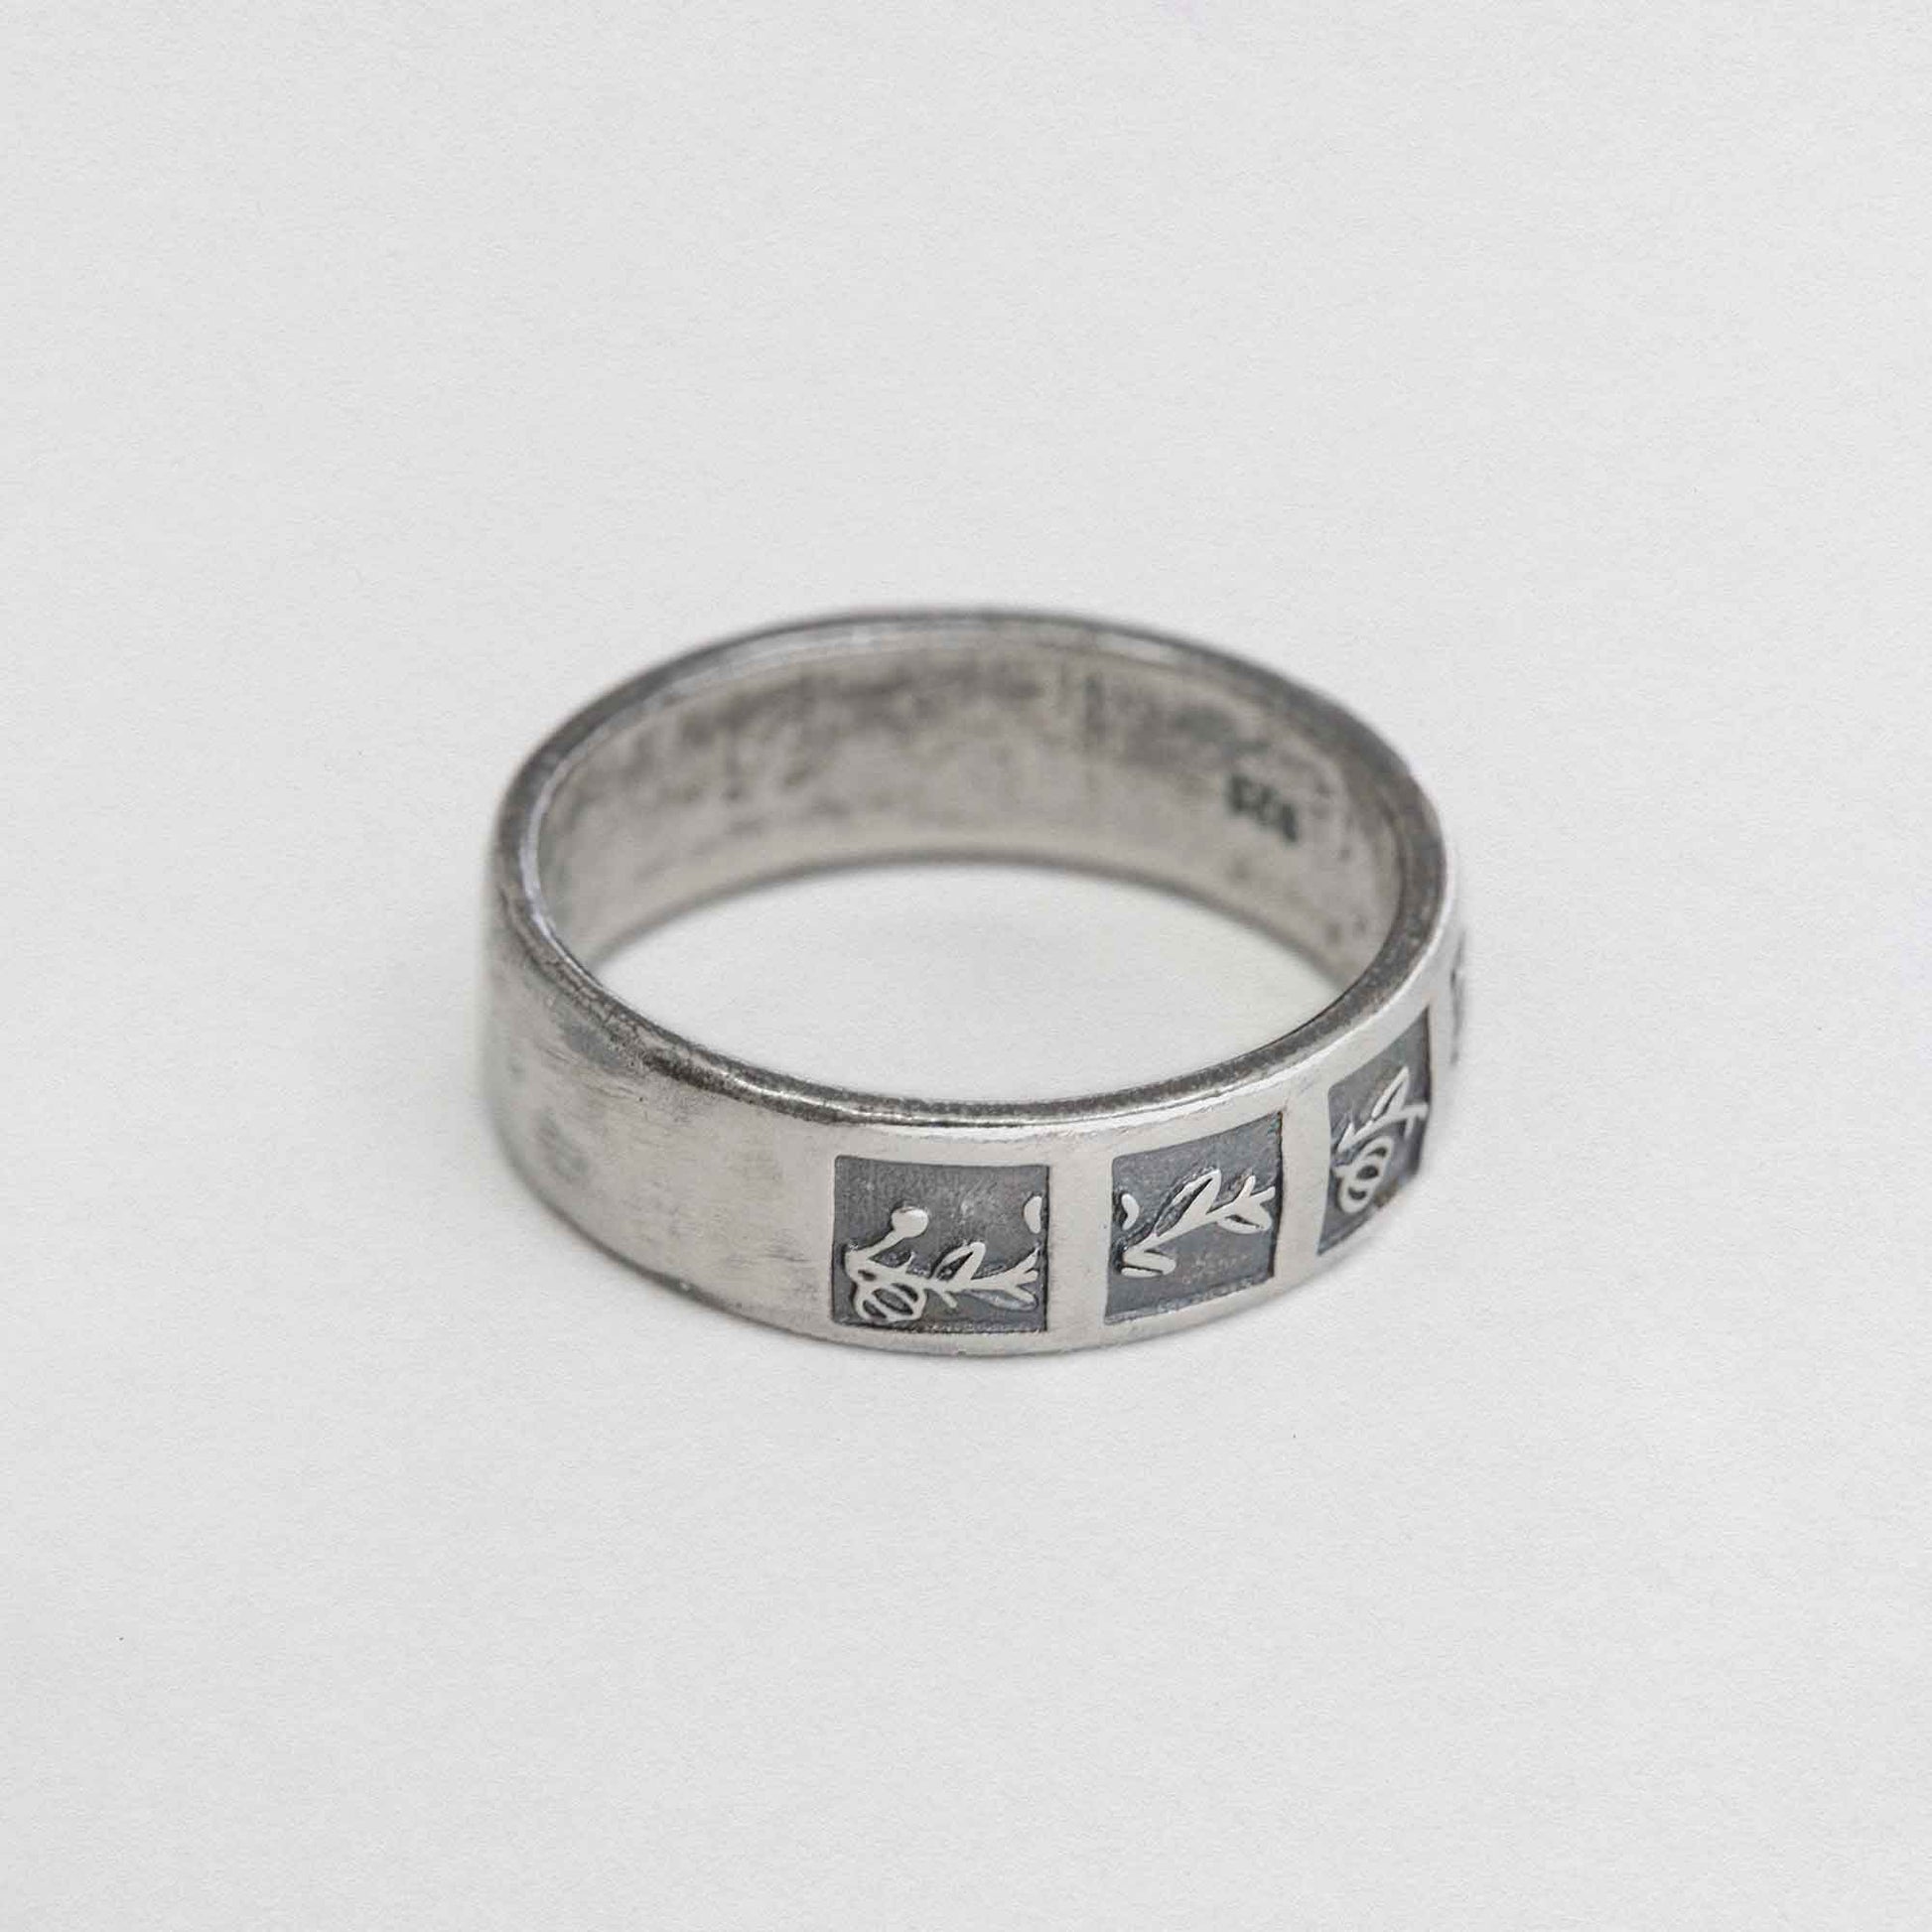 Vine Engraved On 925 Silver Signet Ring